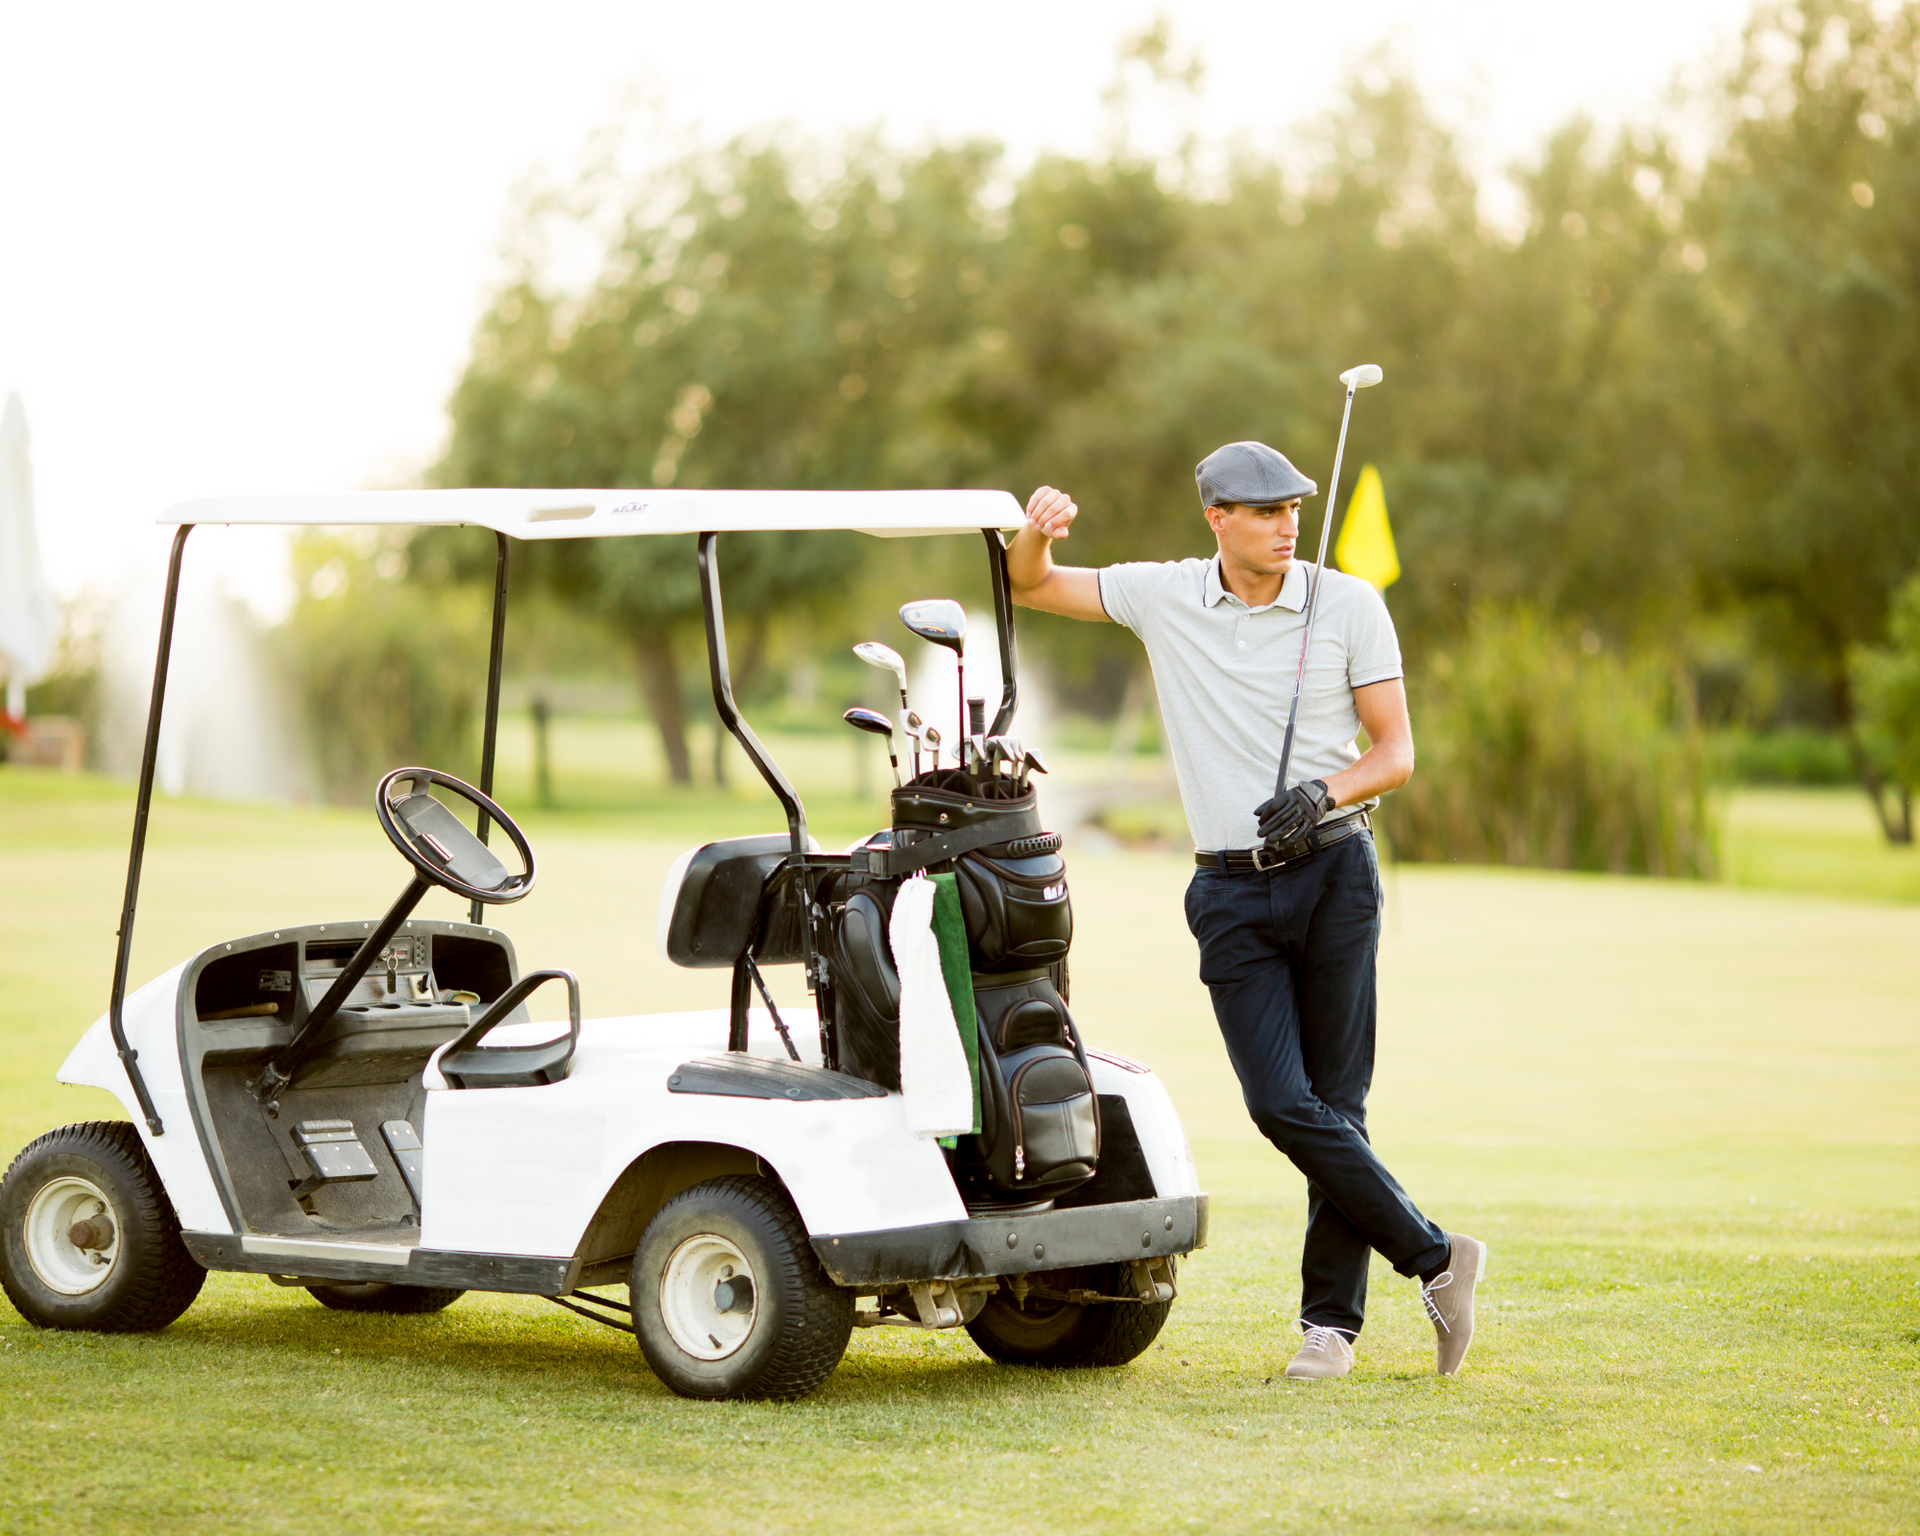 A man is standing next to a golf cart on a golf course.